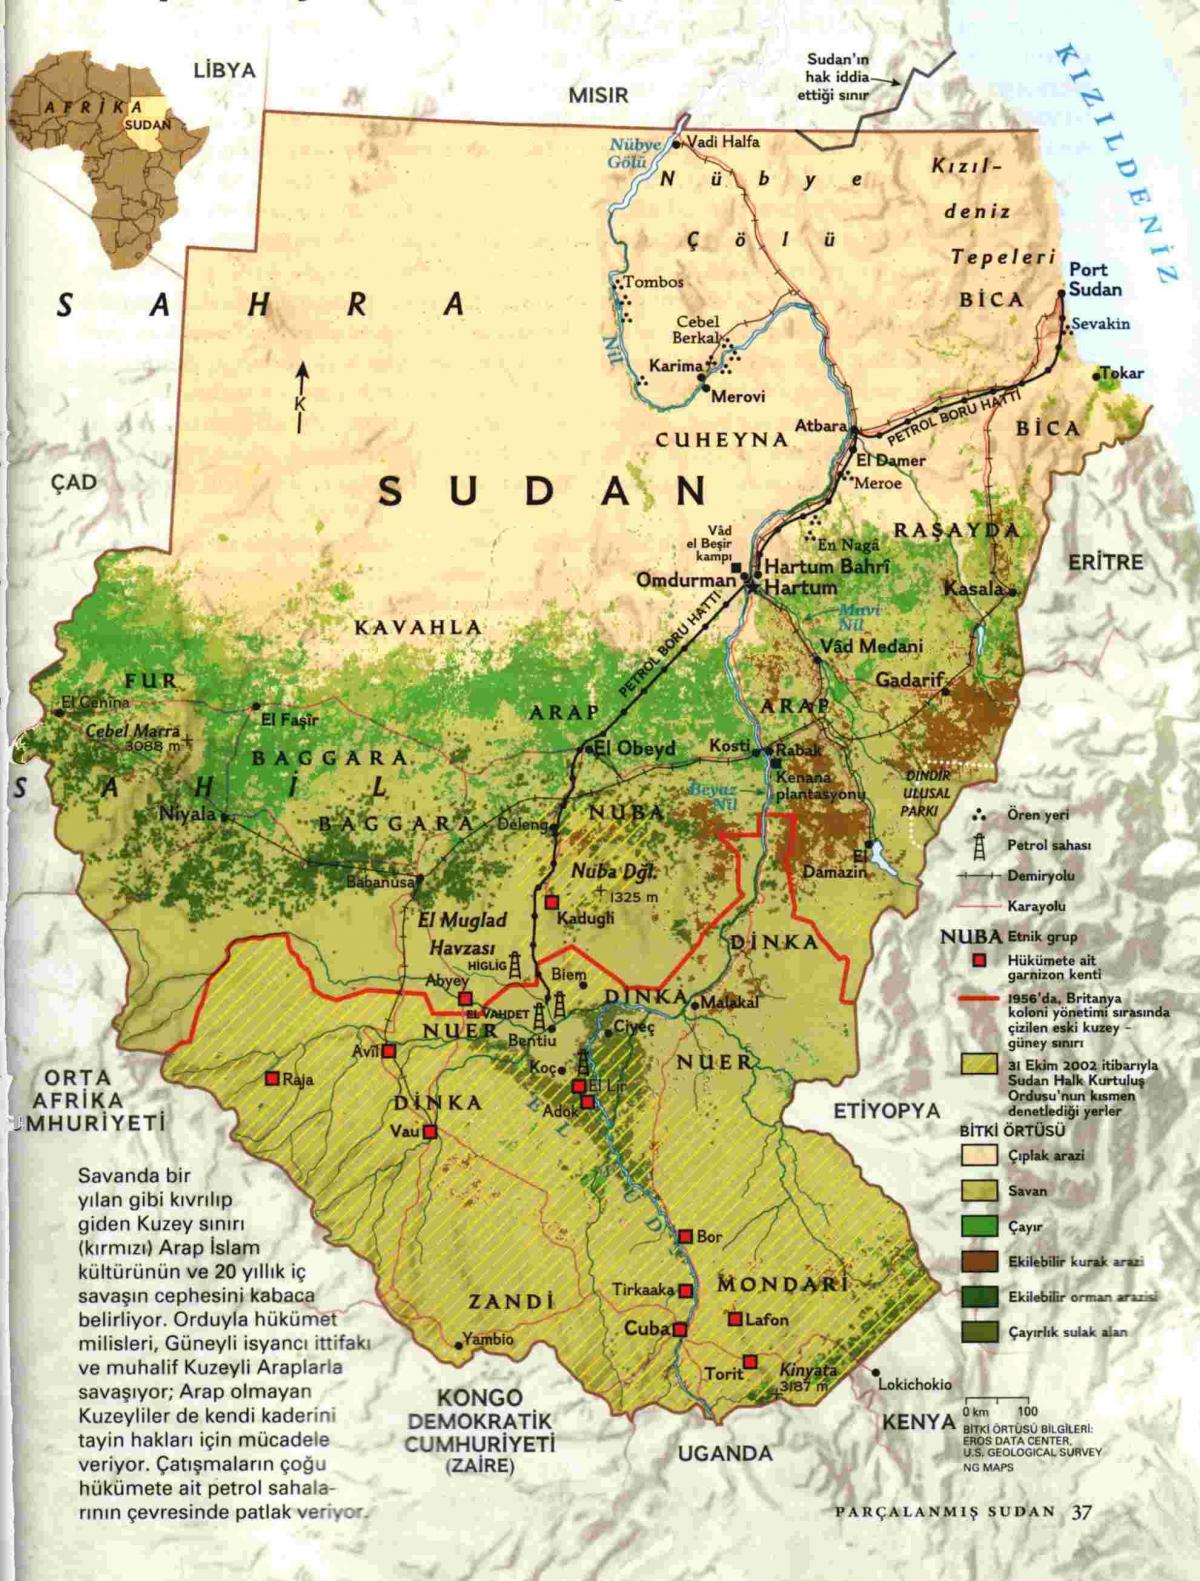 Kort over Sudan geografi